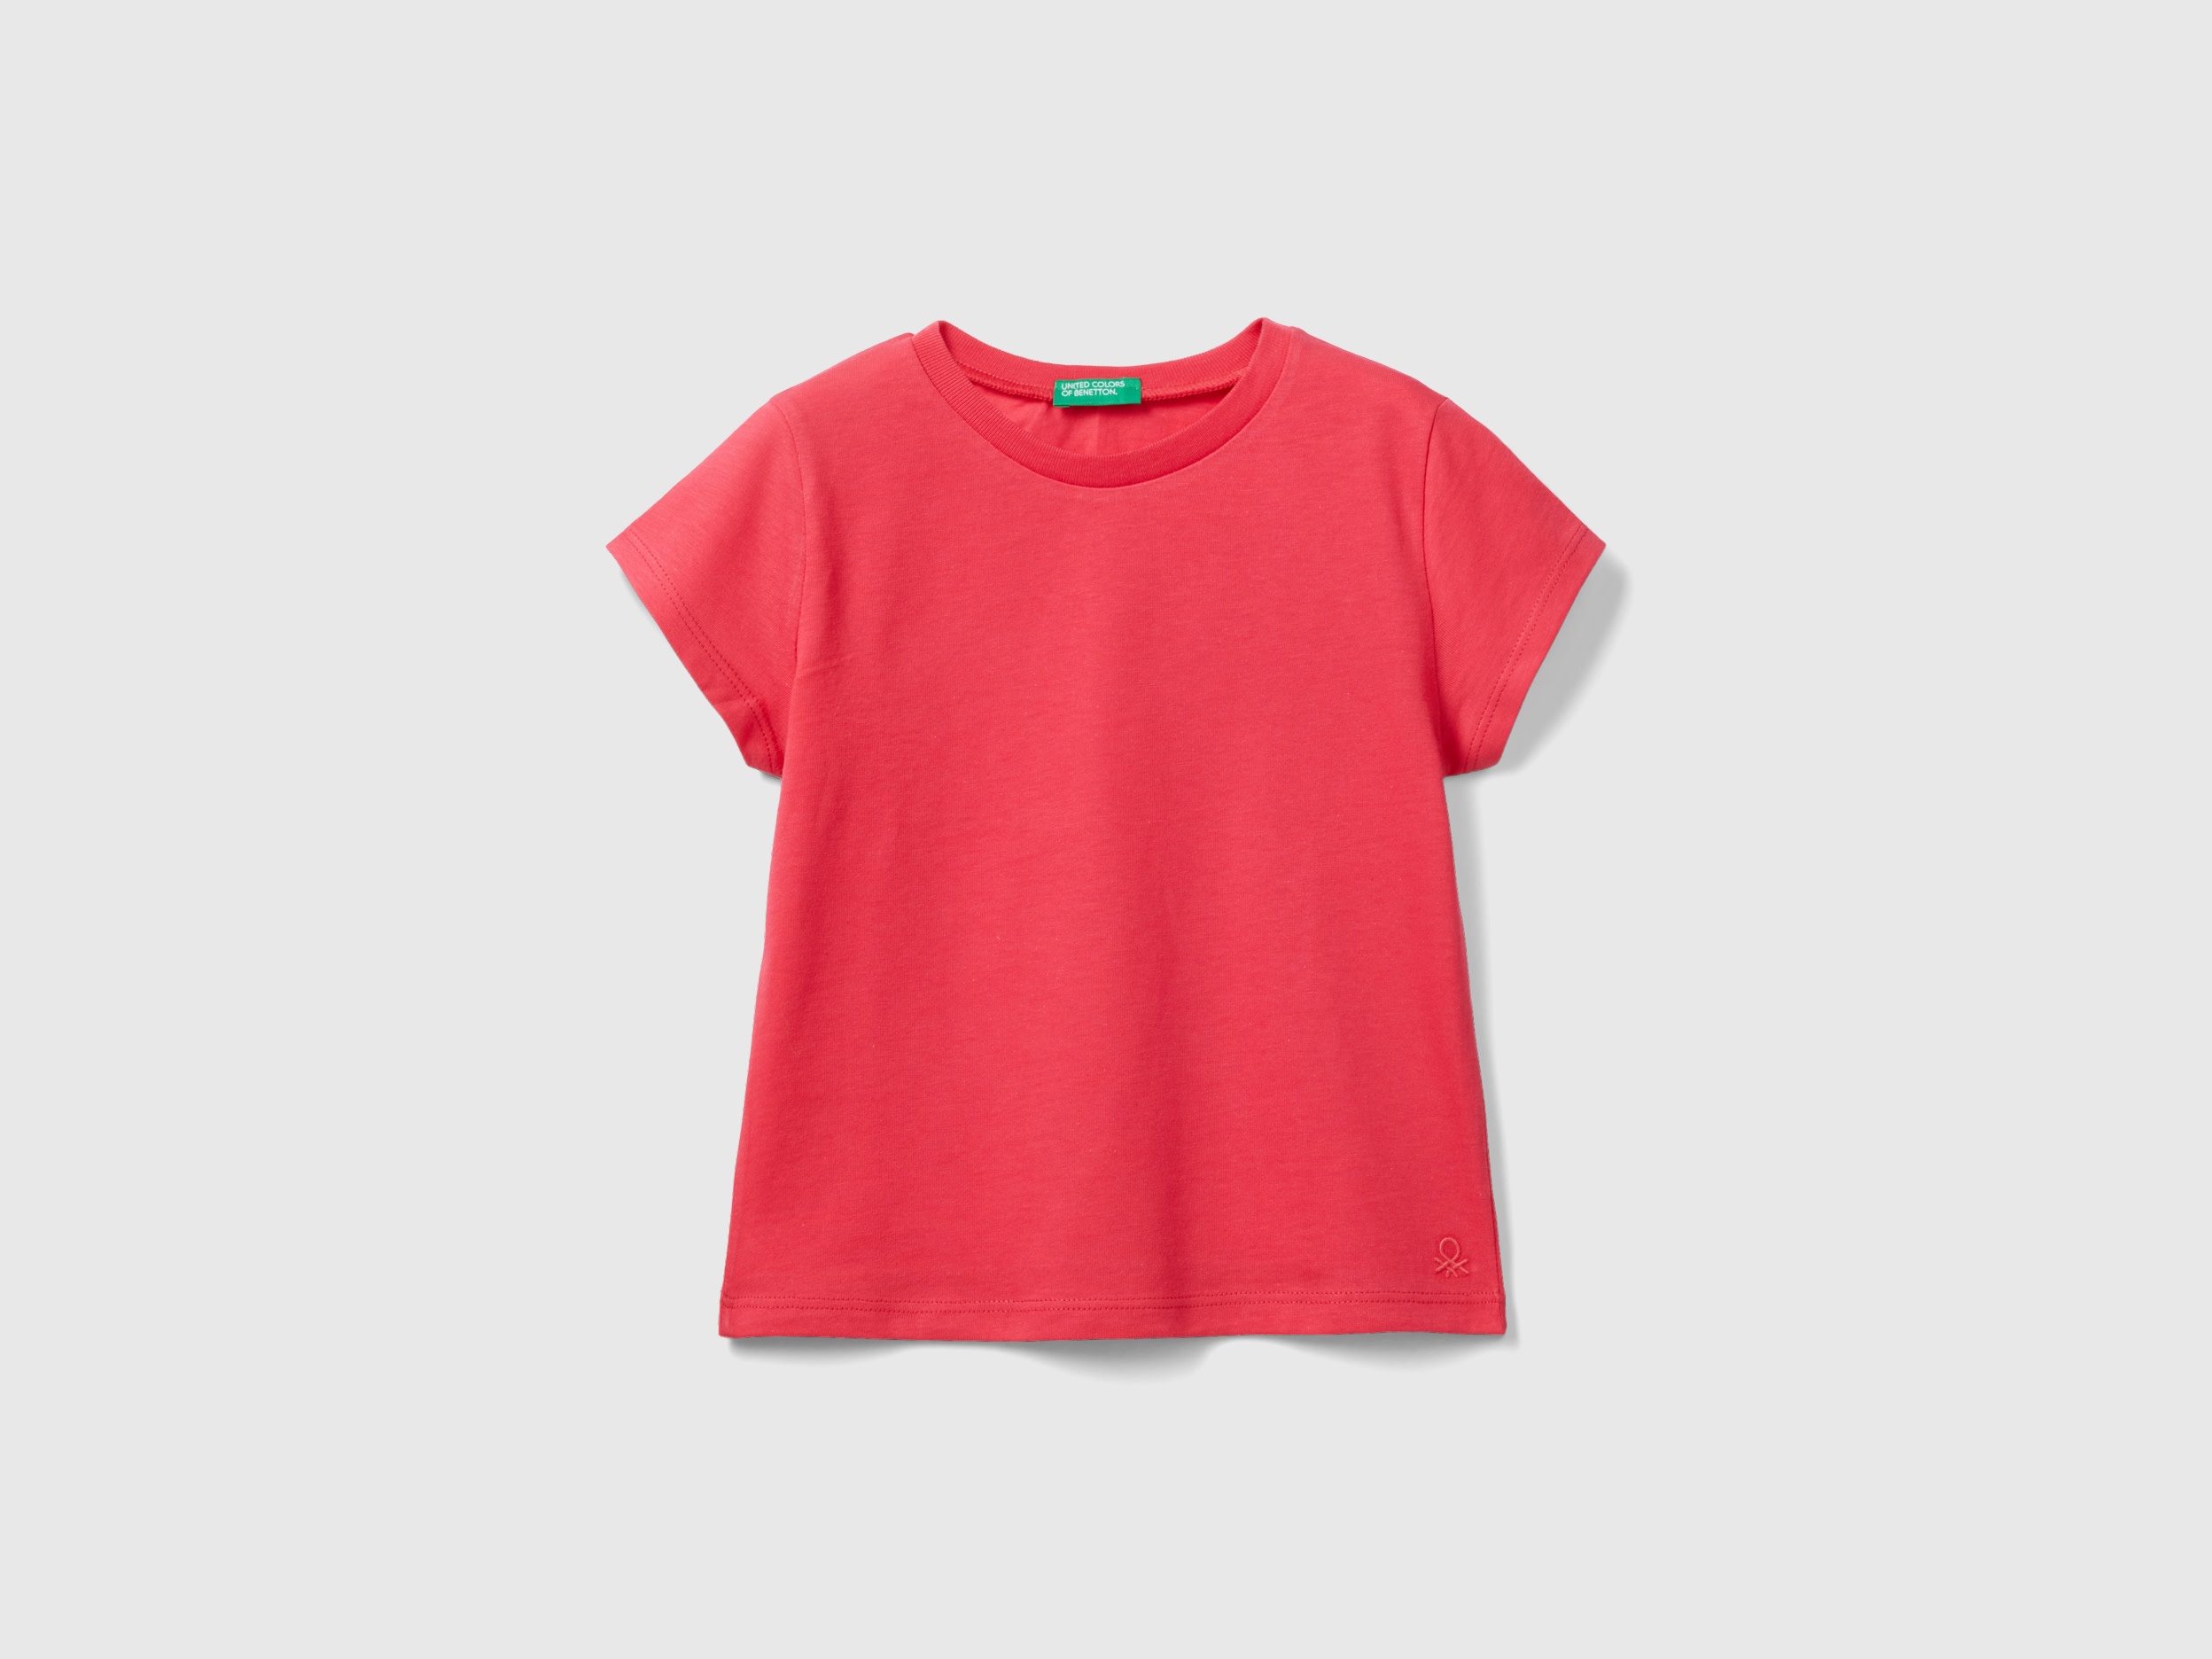 Benetton, 100% Organic Cotton T-shirt, size 4-5, Fuchsia, Kids